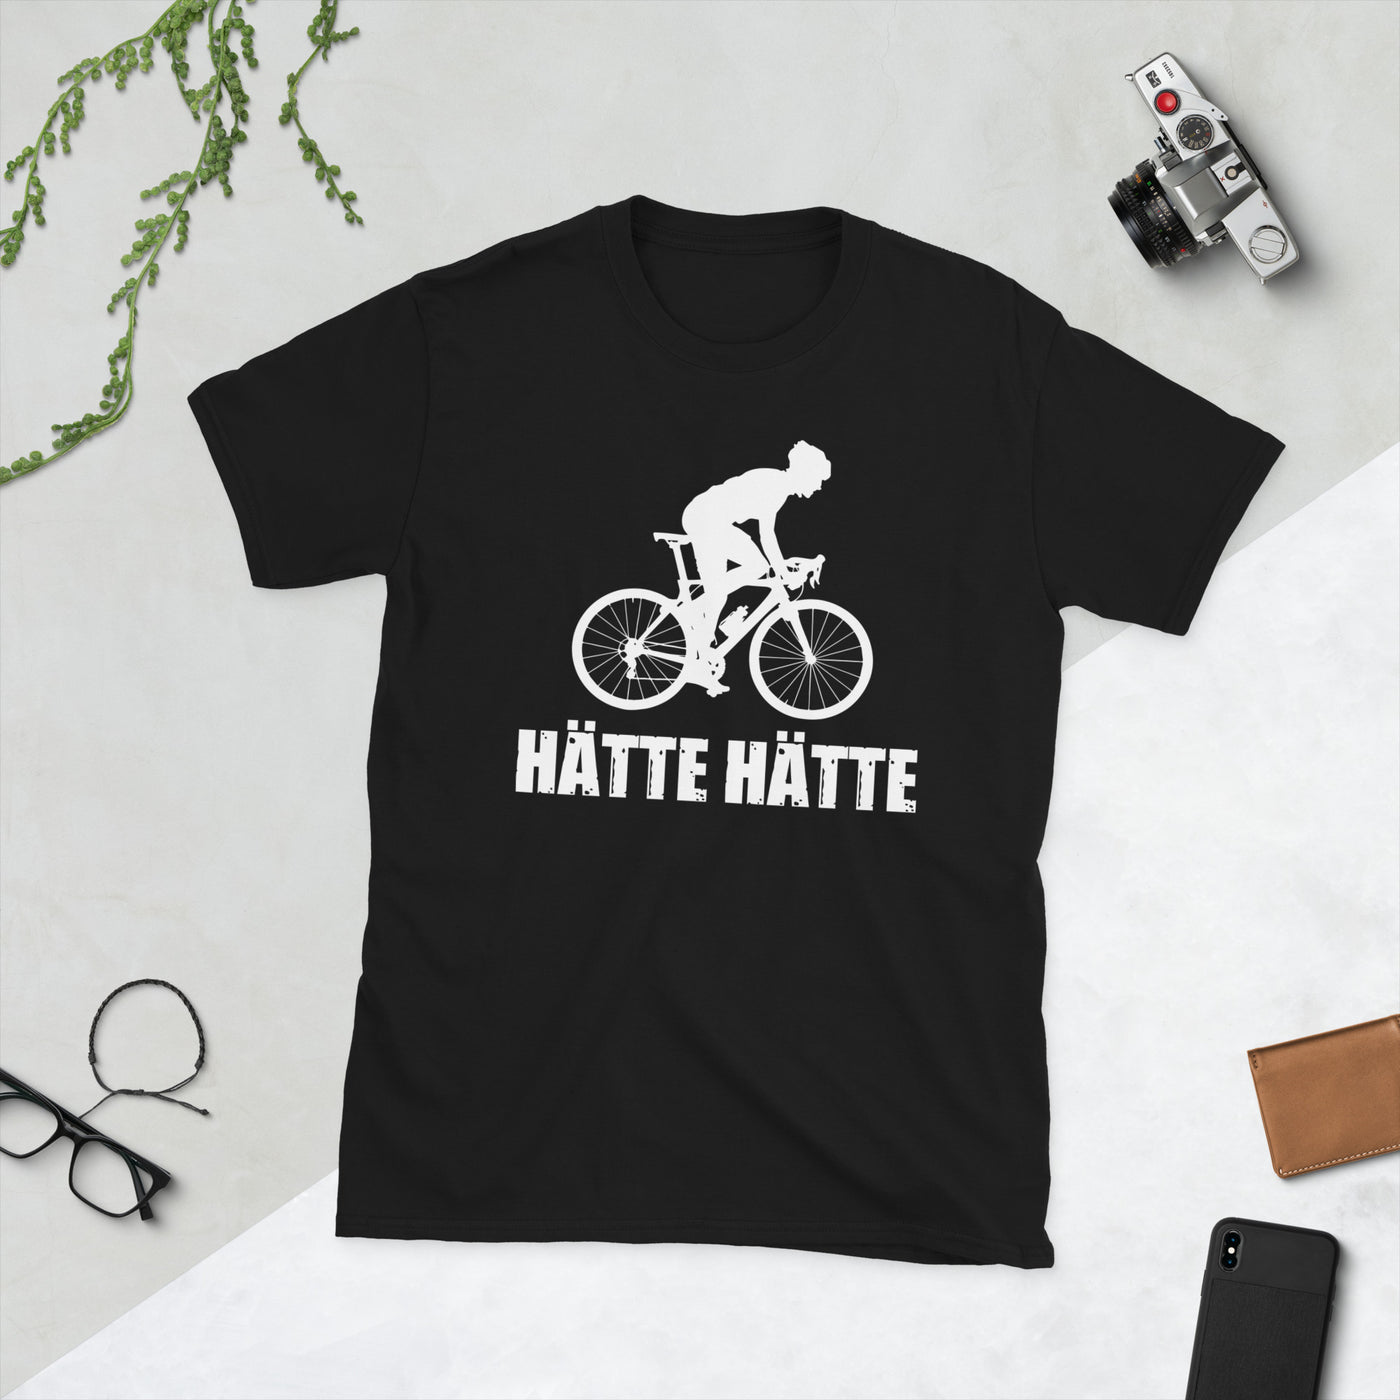 Hatte Hatte 2 - T-Shirt (Unisex) fahrrad Black